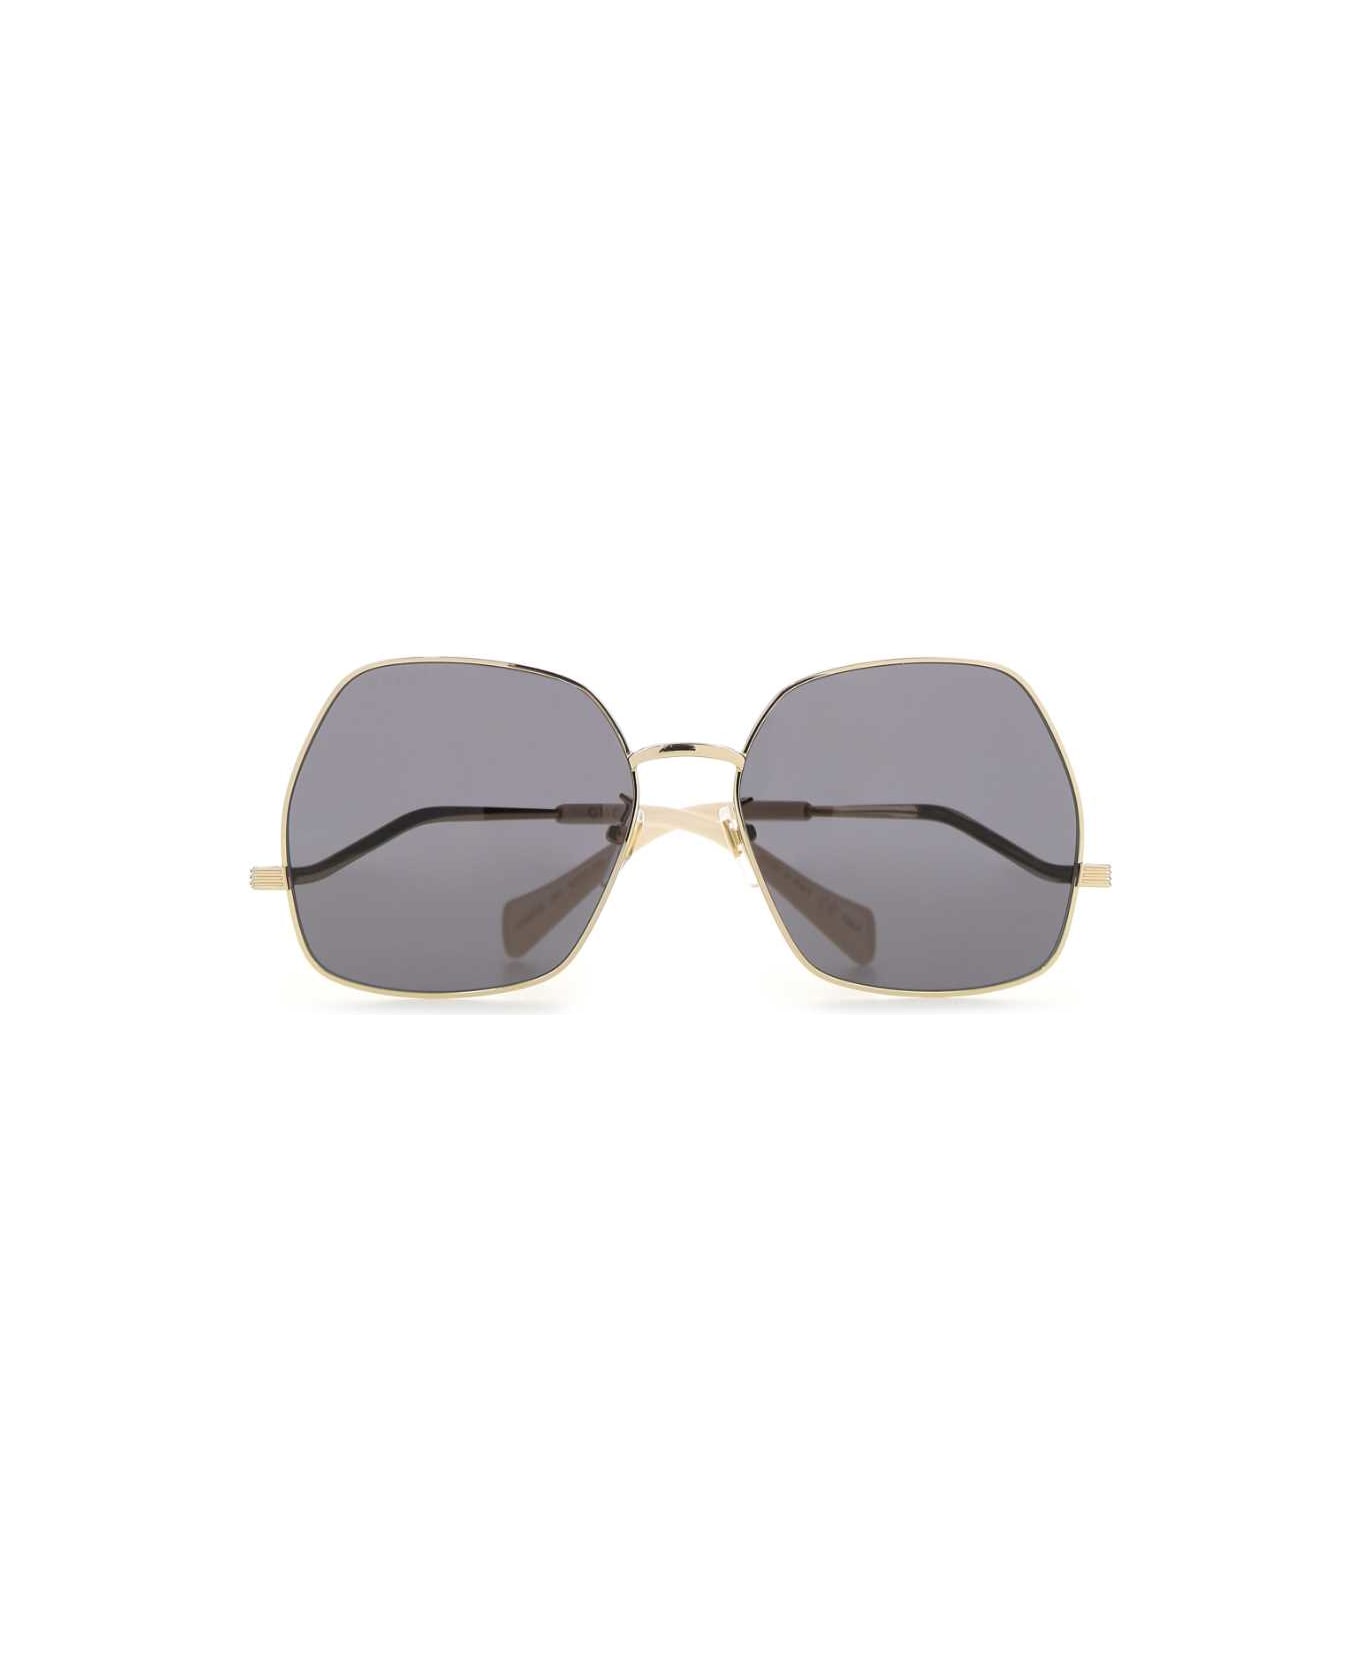 Gucci Gold Metal Sunglasses - 8012 サングラス